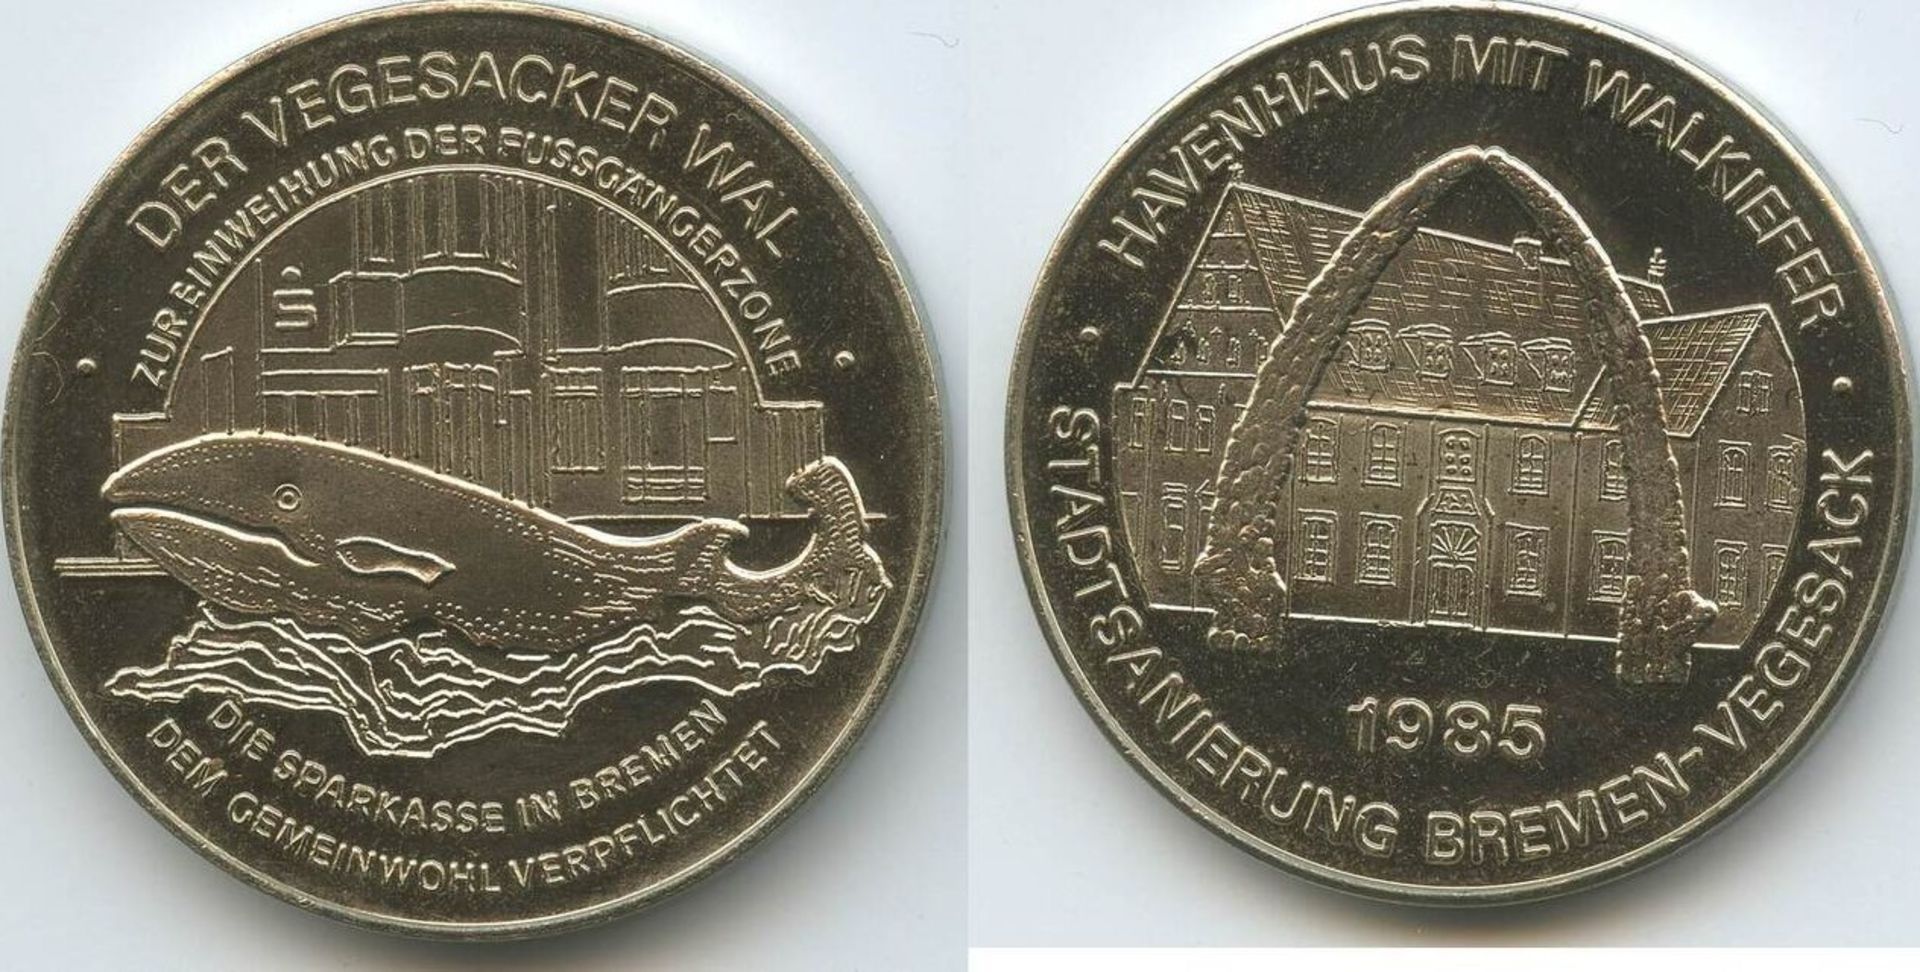 Medaille Der Vegesacker Wal